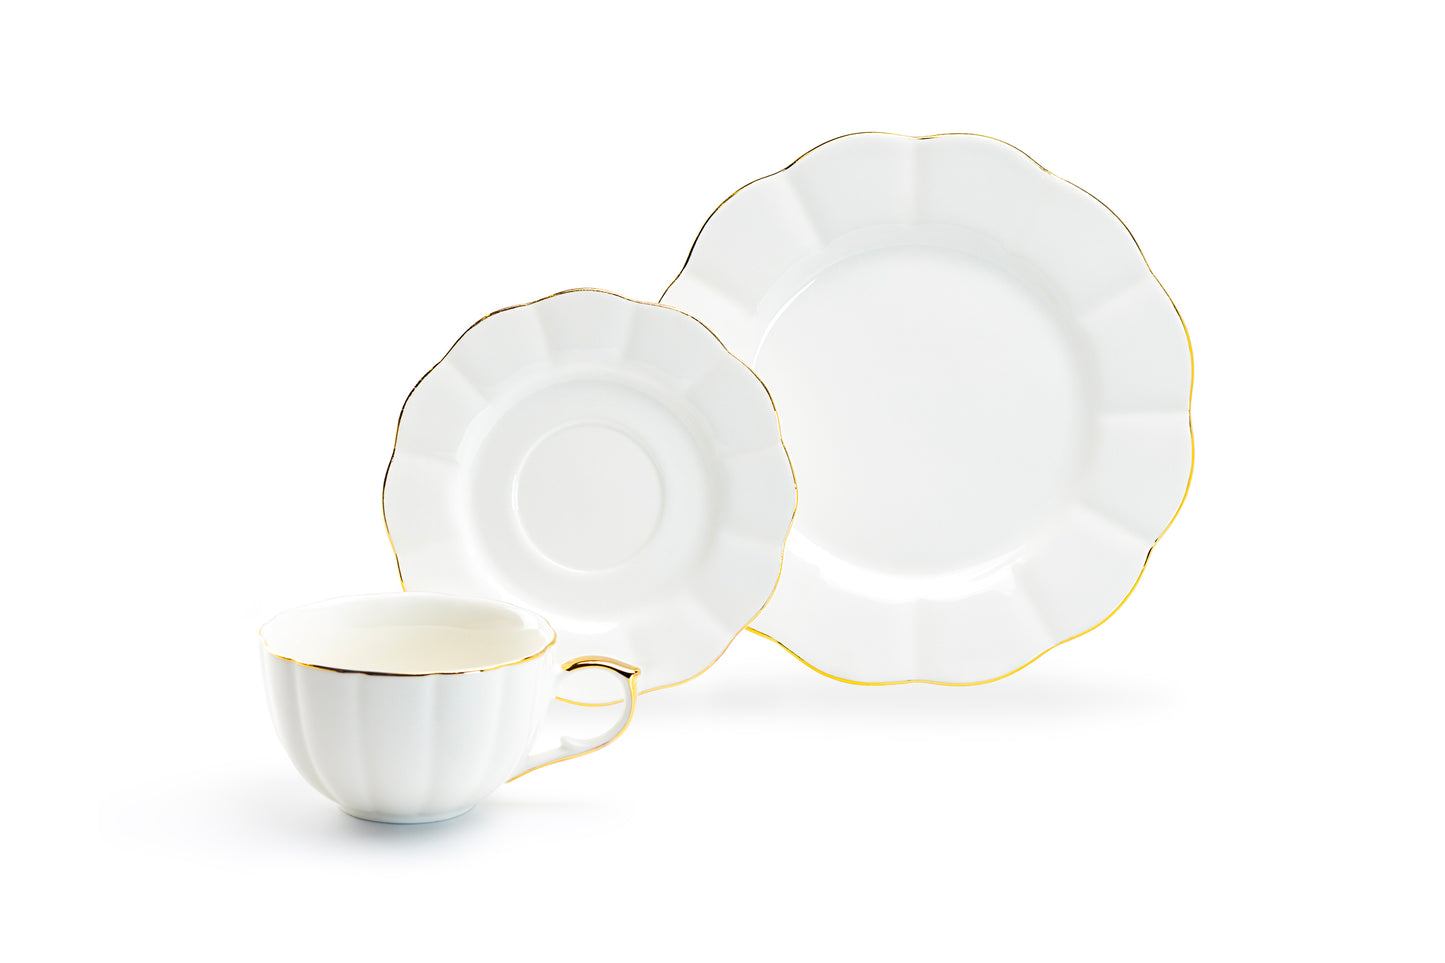 White Gold Scallop Fine Porcelain Dessert / Dinner Plate